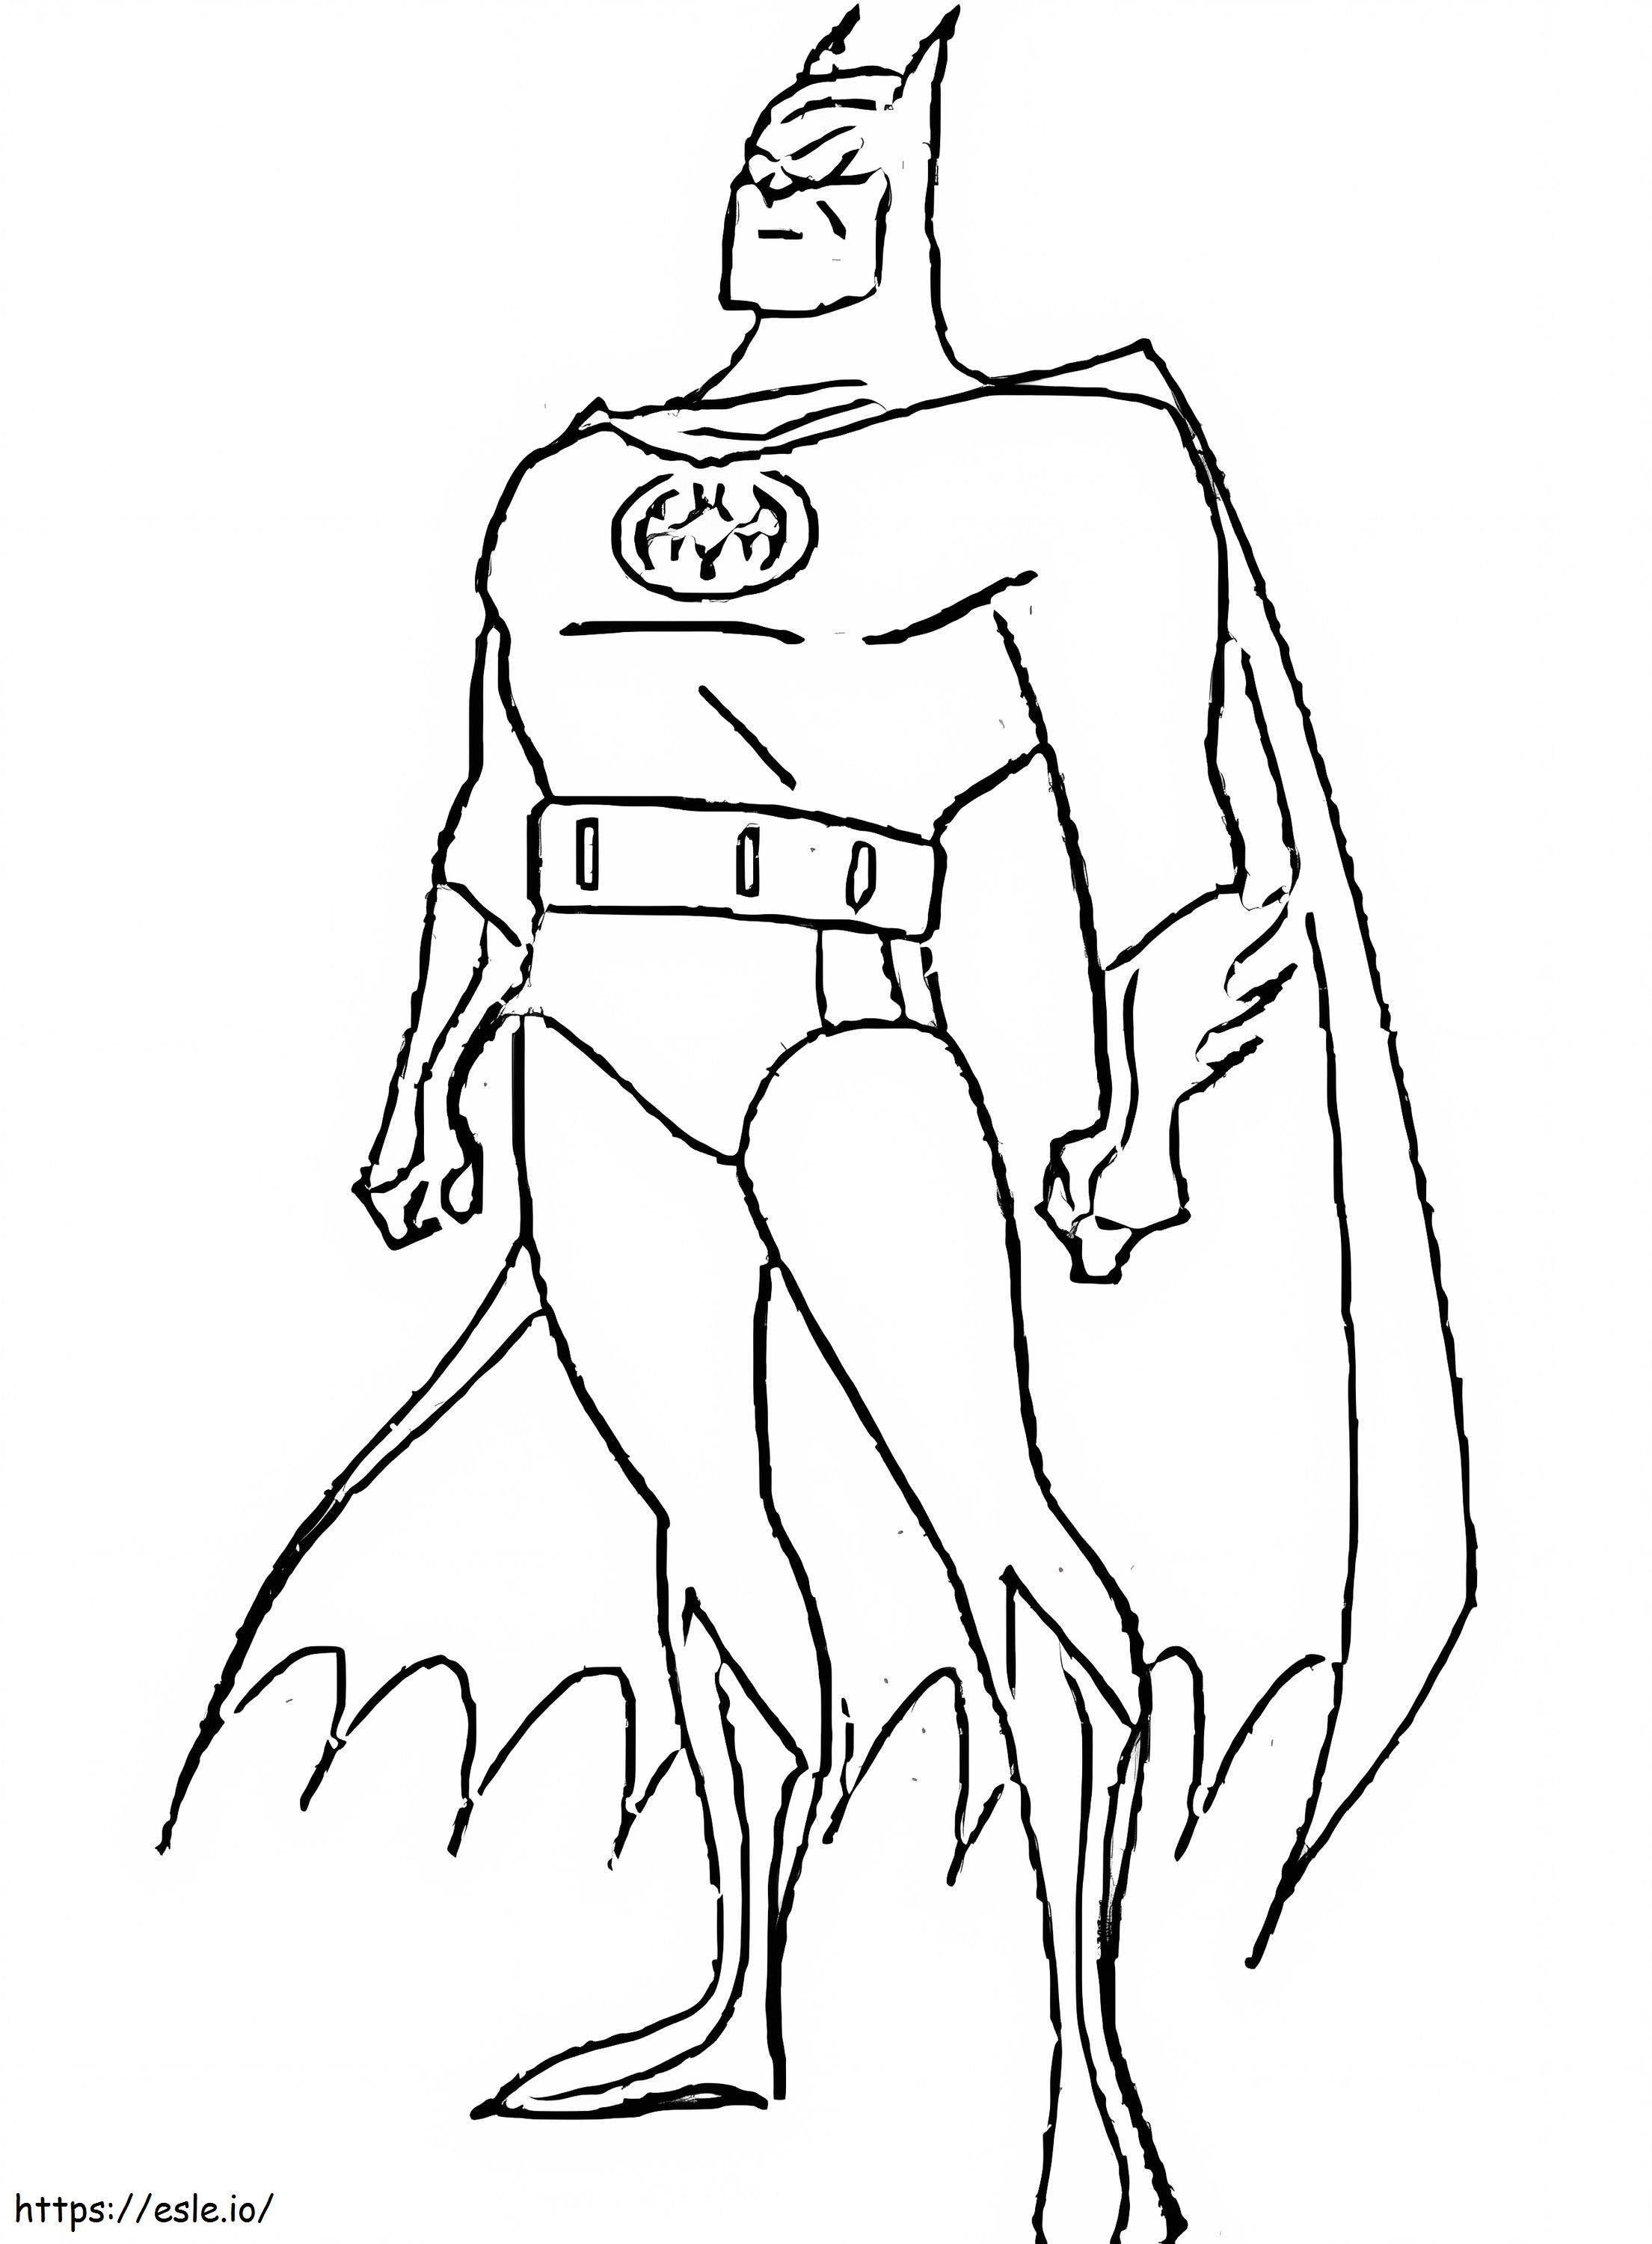 Bat Man coloring page